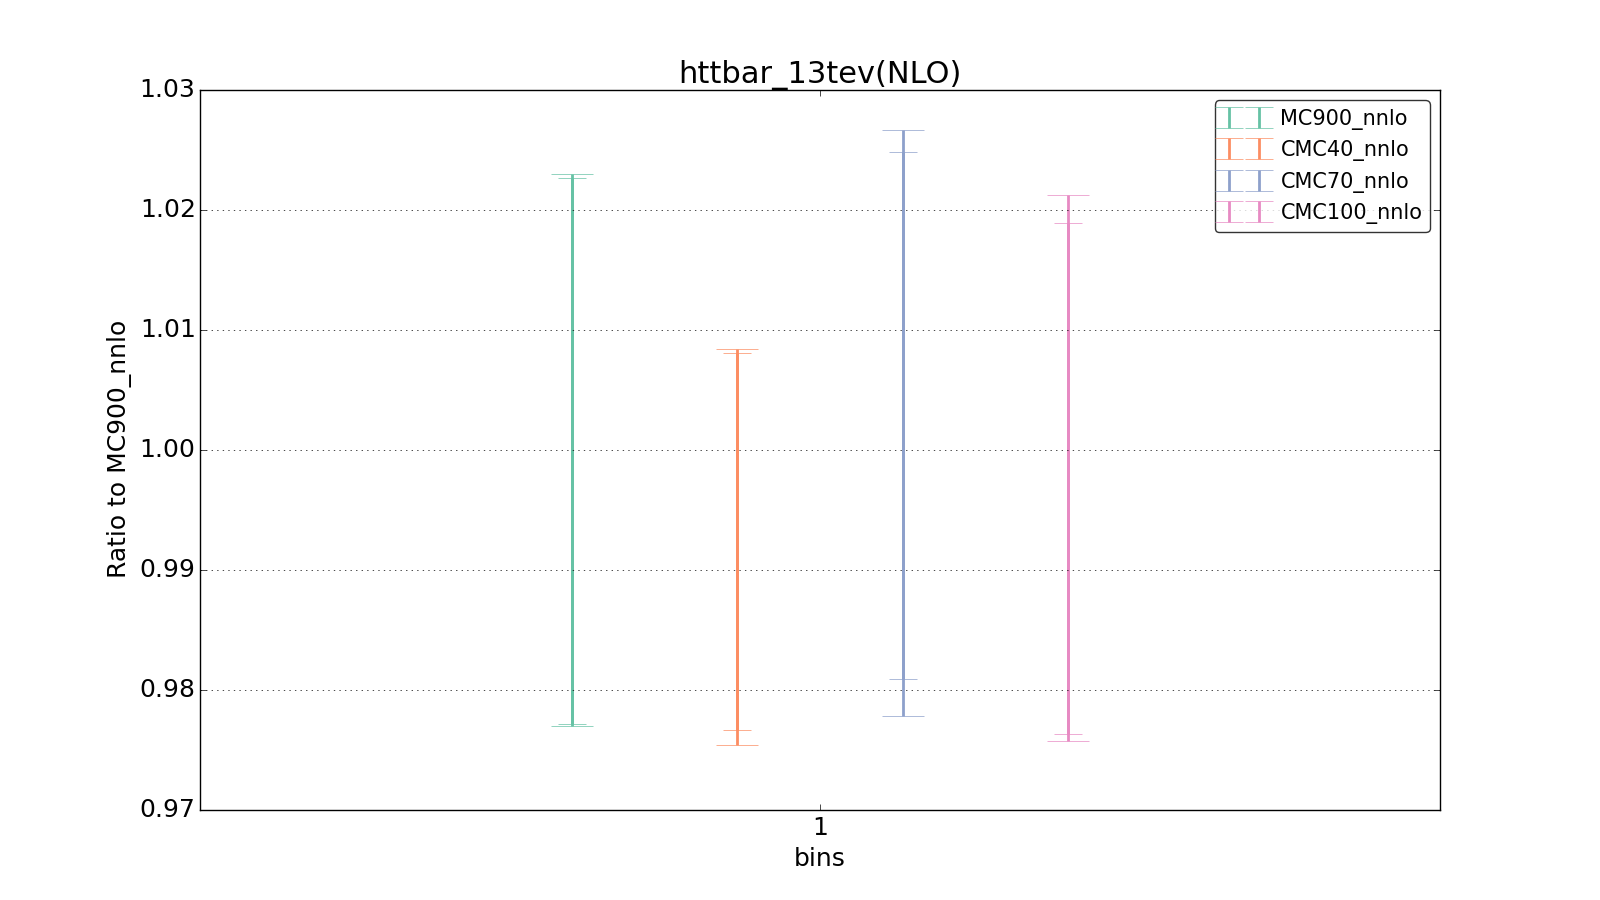 figure plots/CMCpheno/group_0_ciplot_httbar_13tev(NLO).png